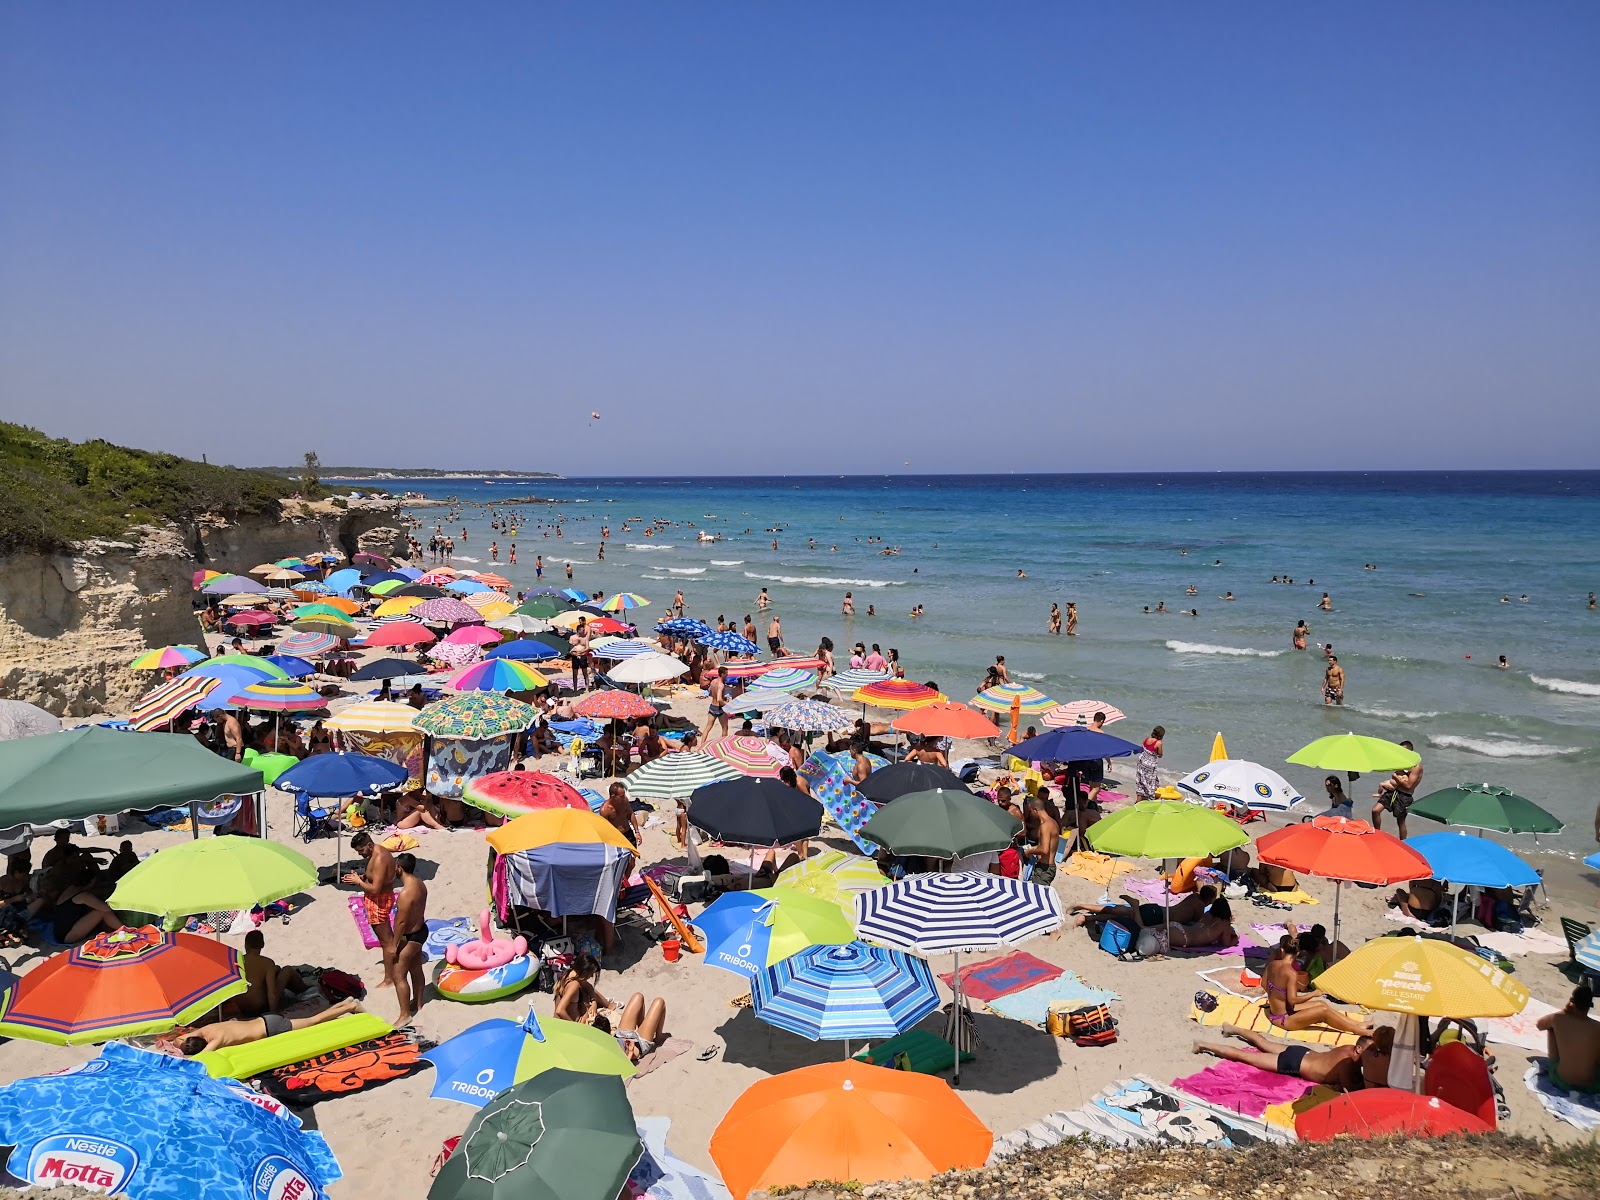 Foto de Spiaggia Baia dei Turchi ubicado en área natural